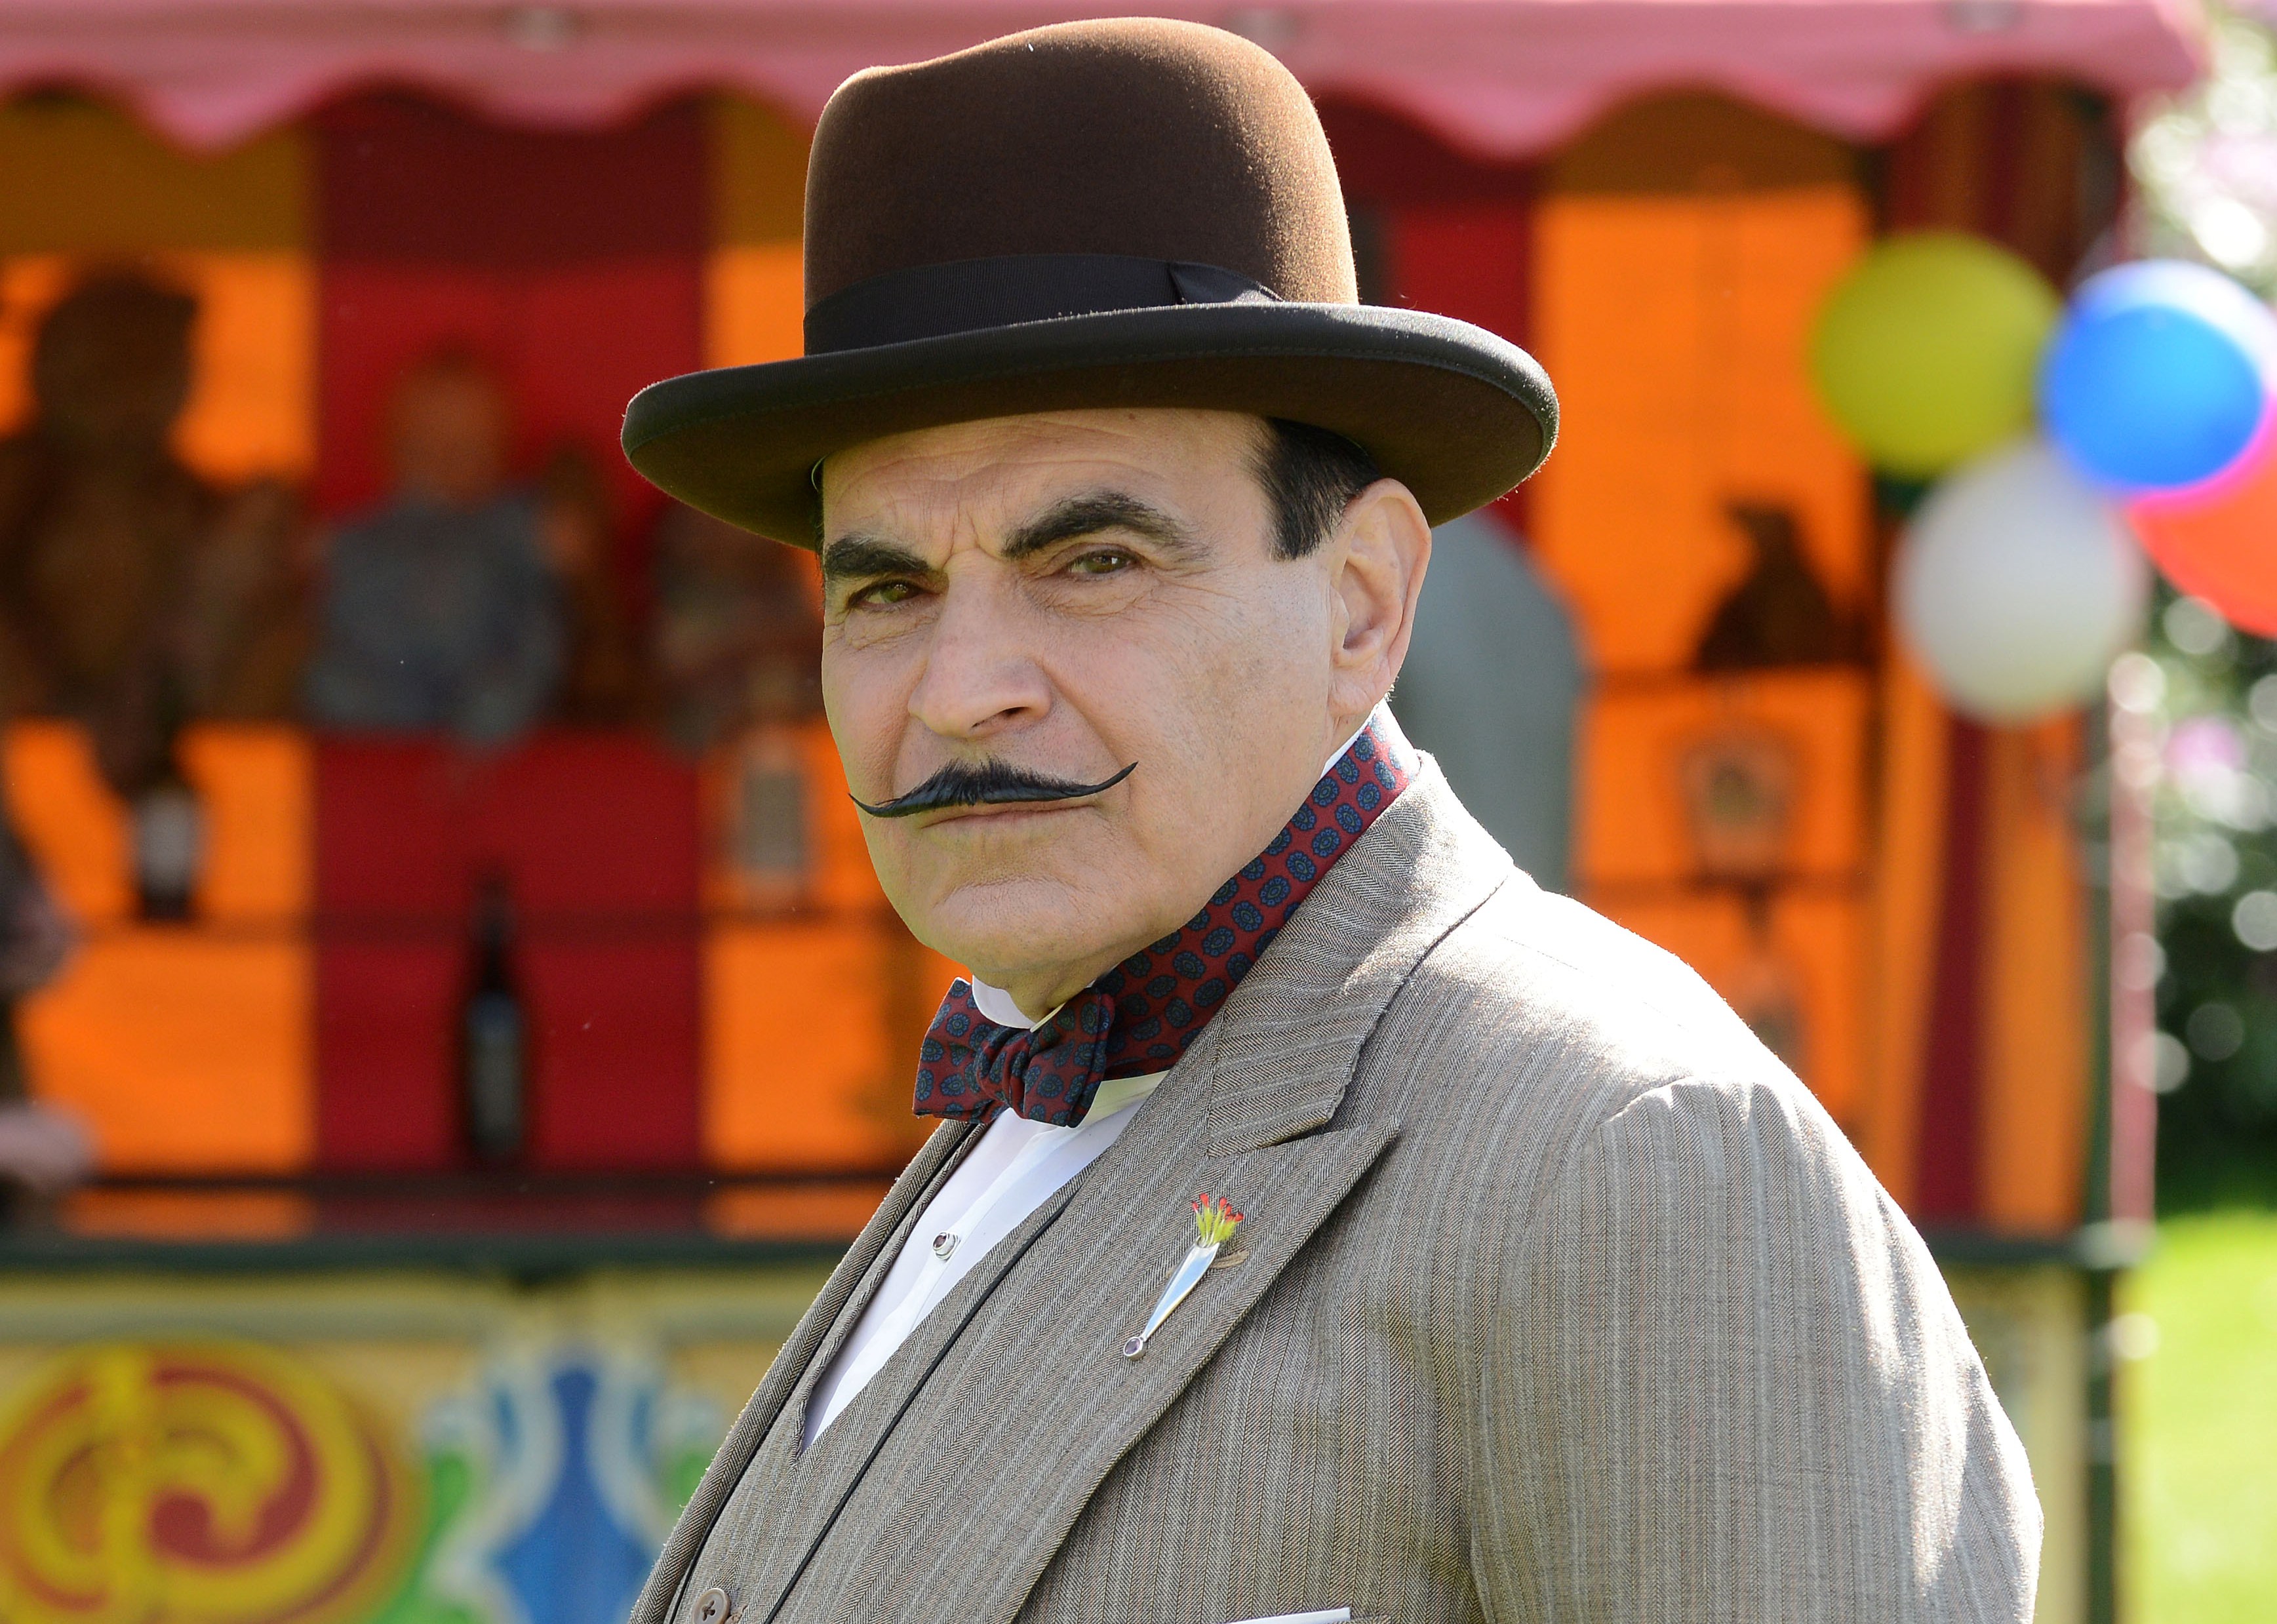 David Suchet as Hercule Poirot (Photo: ITV Studios for Masterpiece)